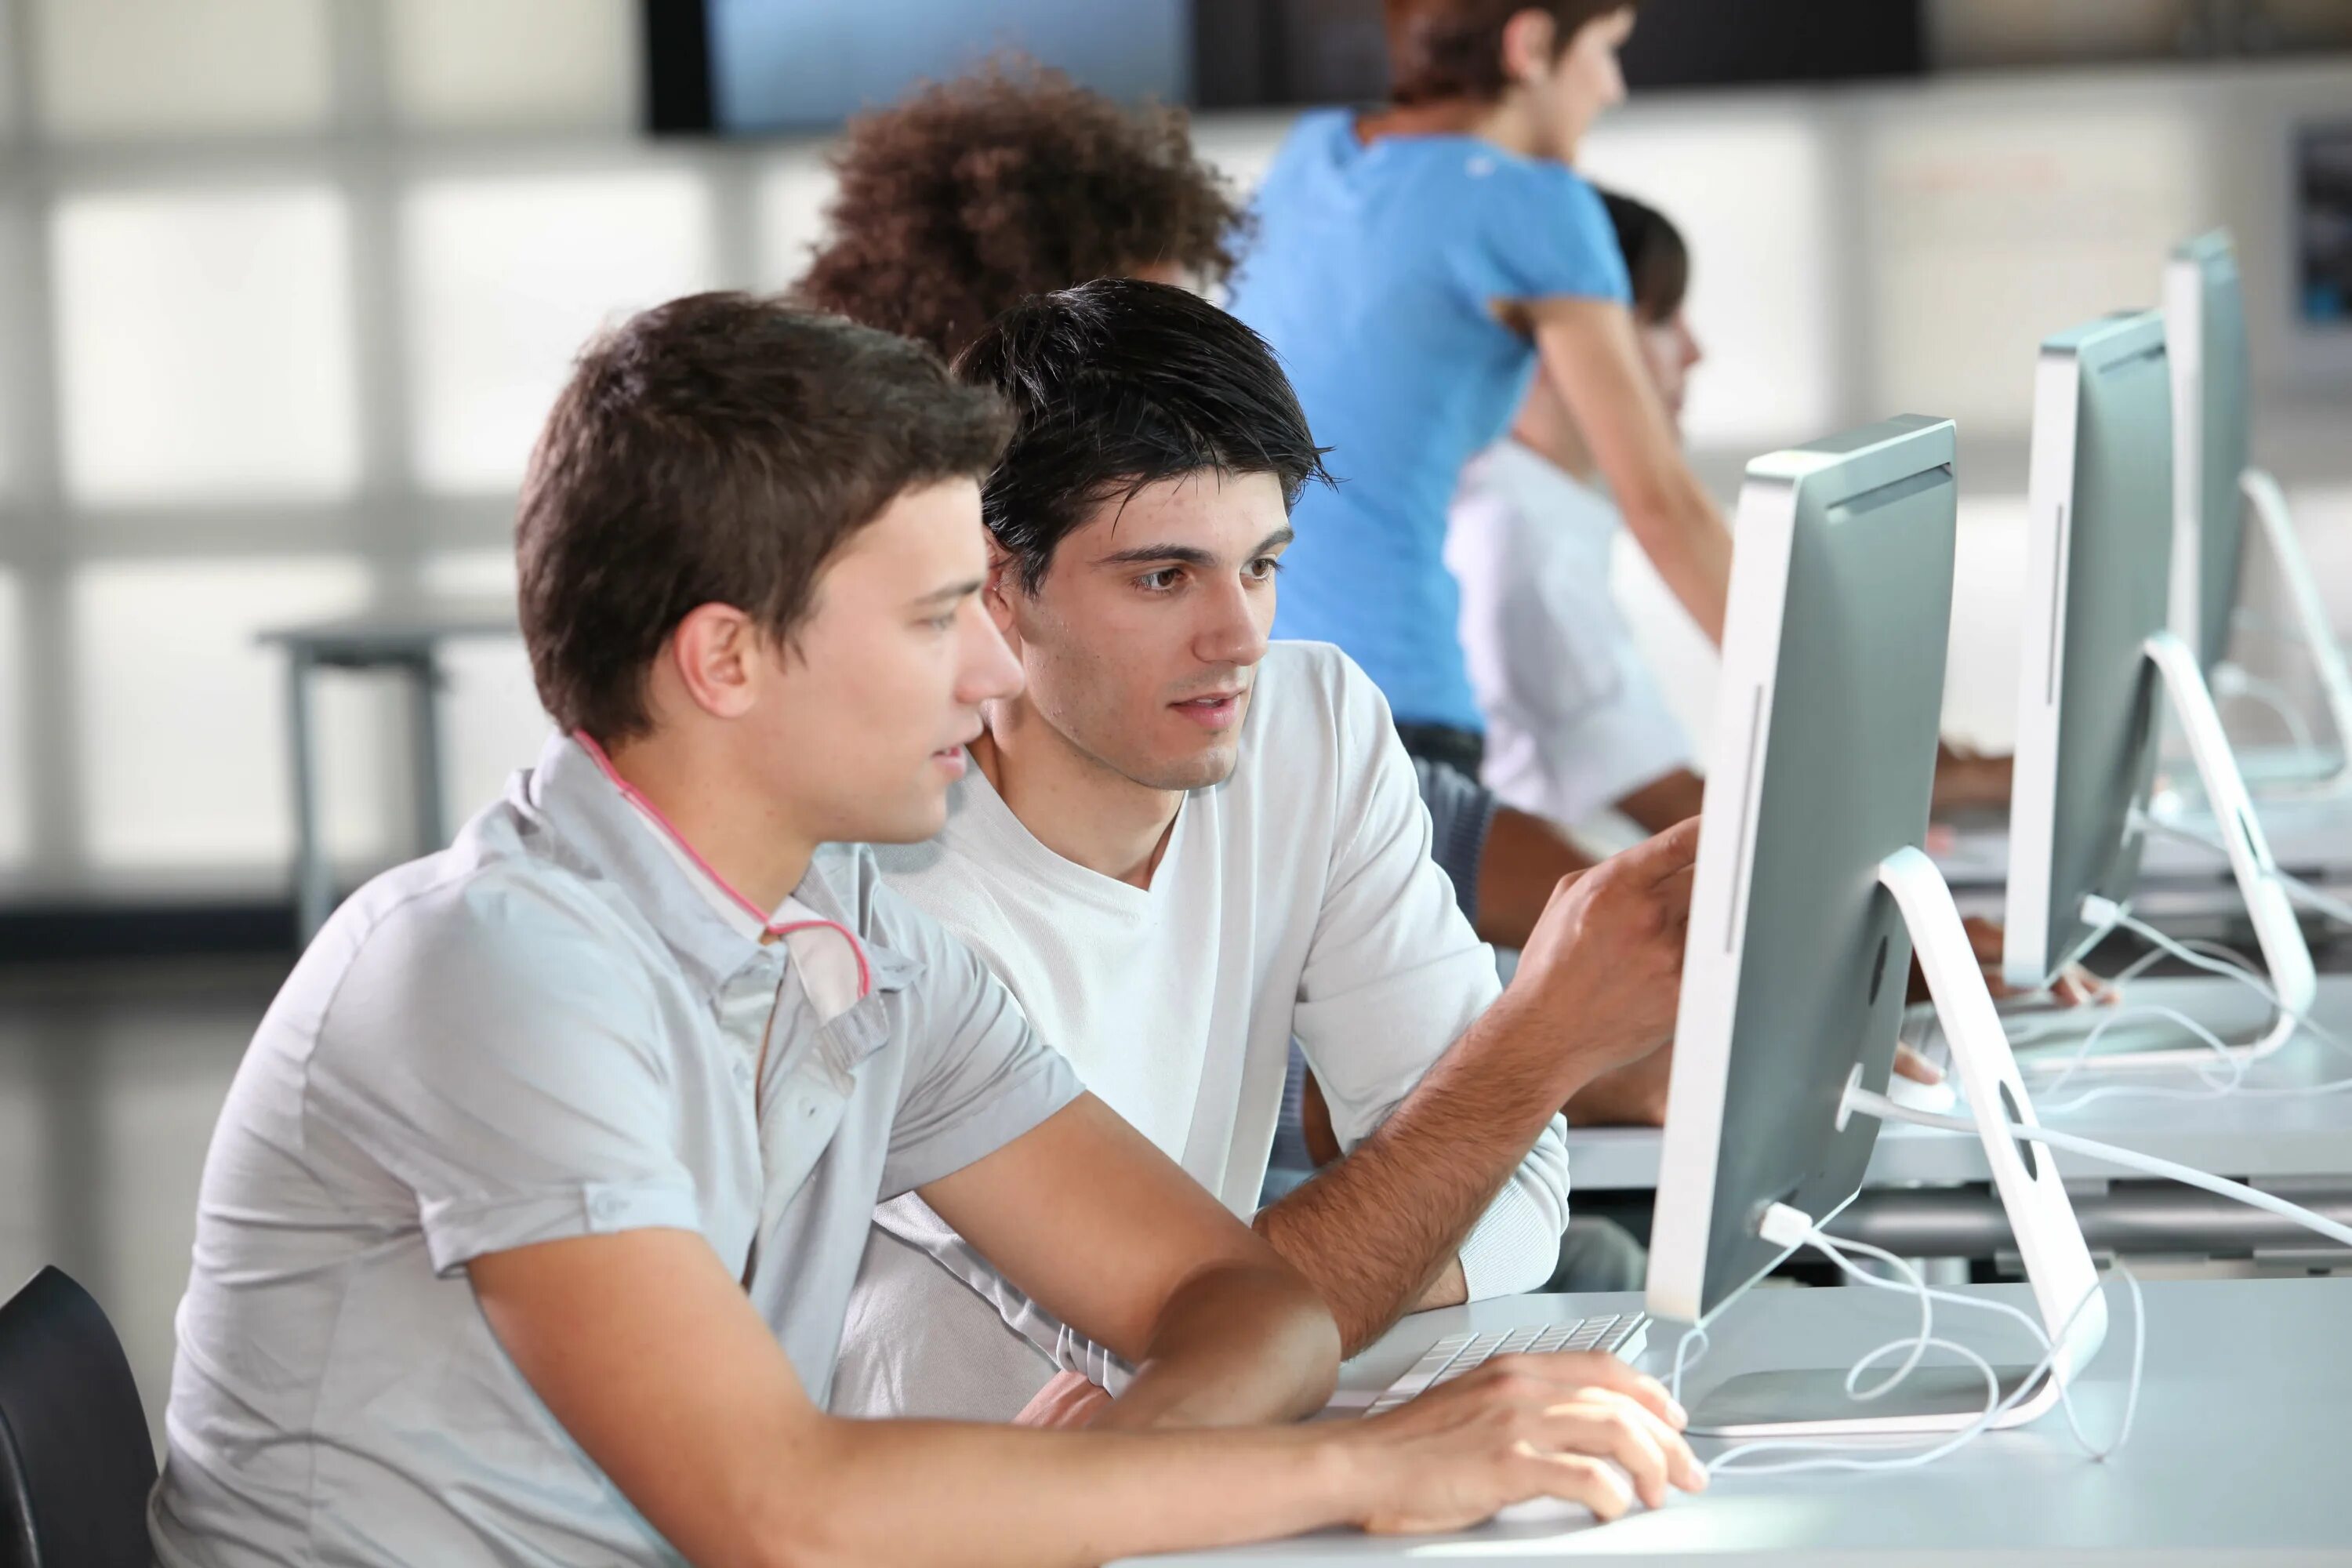 Человек за компьютером. Студент программист. Компьютер и человек. Подросток за компьютером.